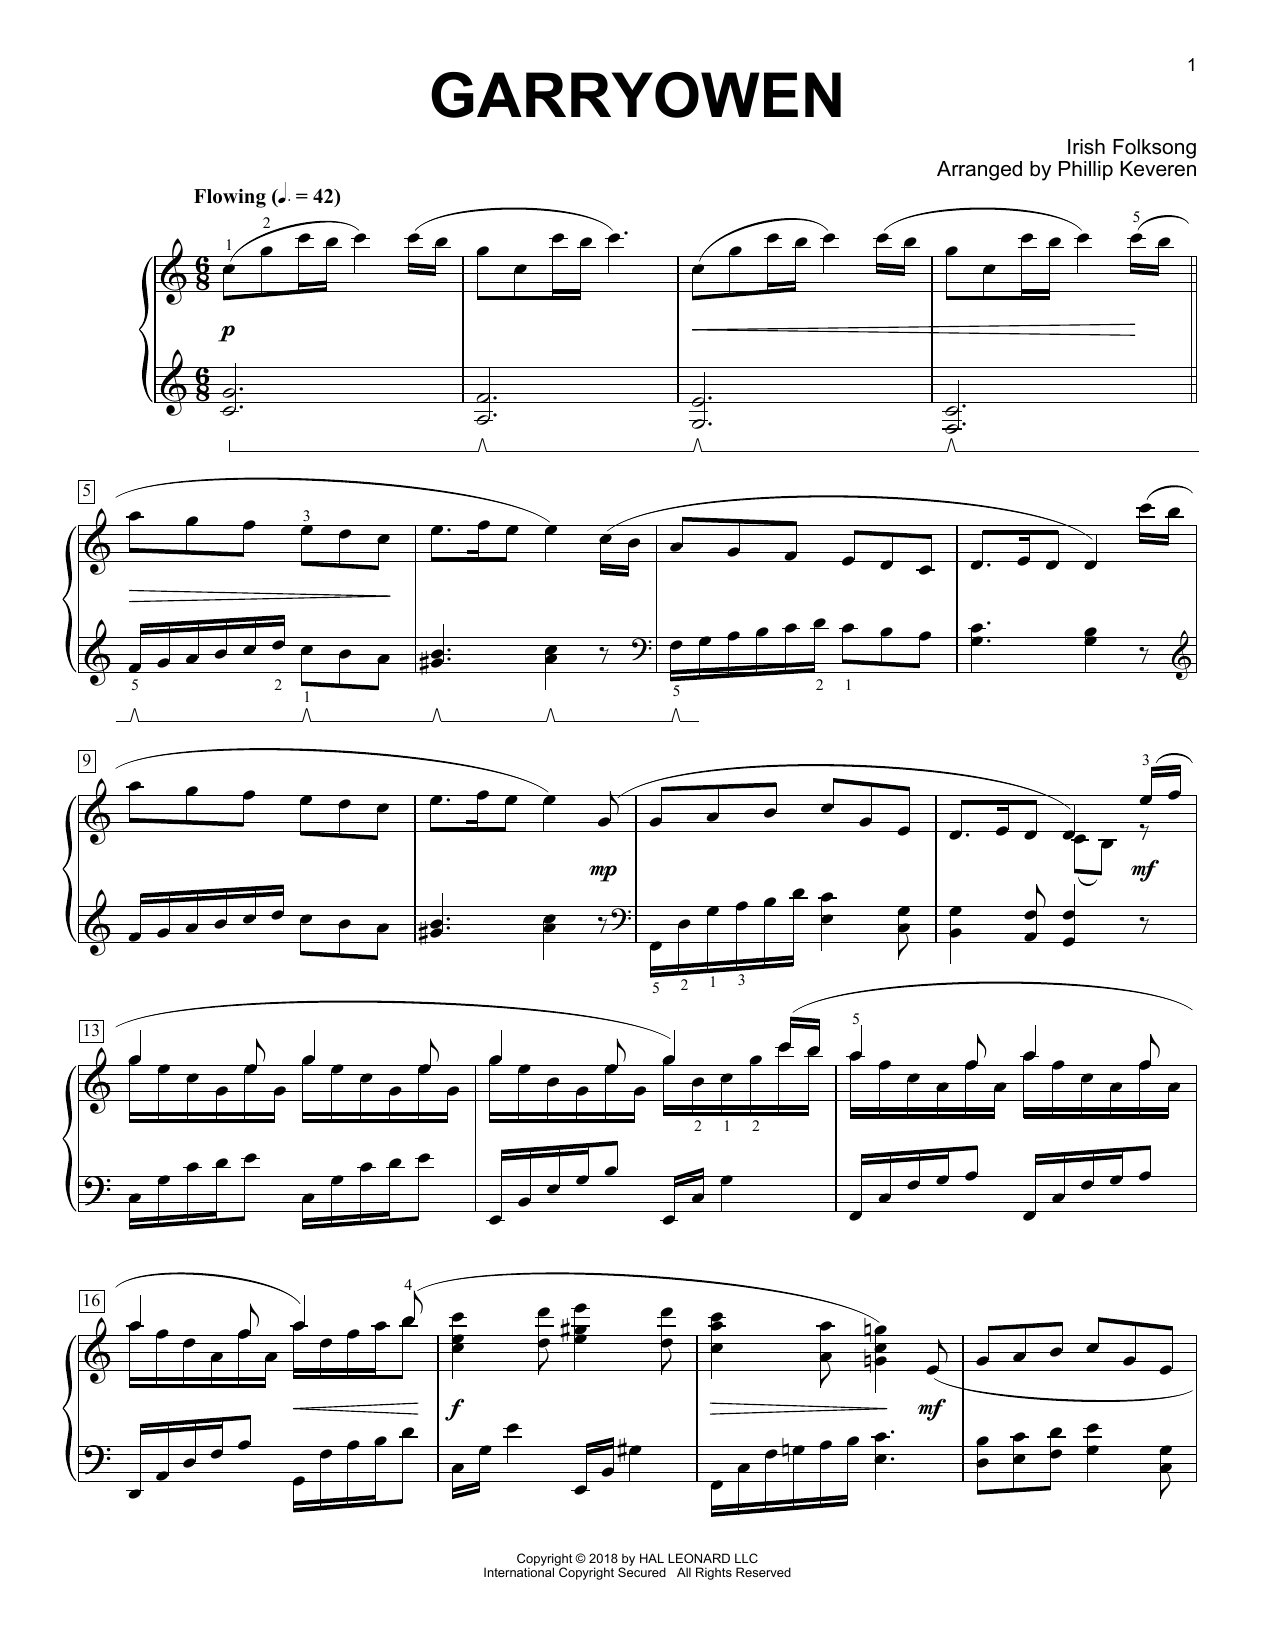 Irish Folksong Garryowen [Classical version] (arr. Phillip Keveren) Sheet Music Notes & Chords for Piano - Download or Print PDF